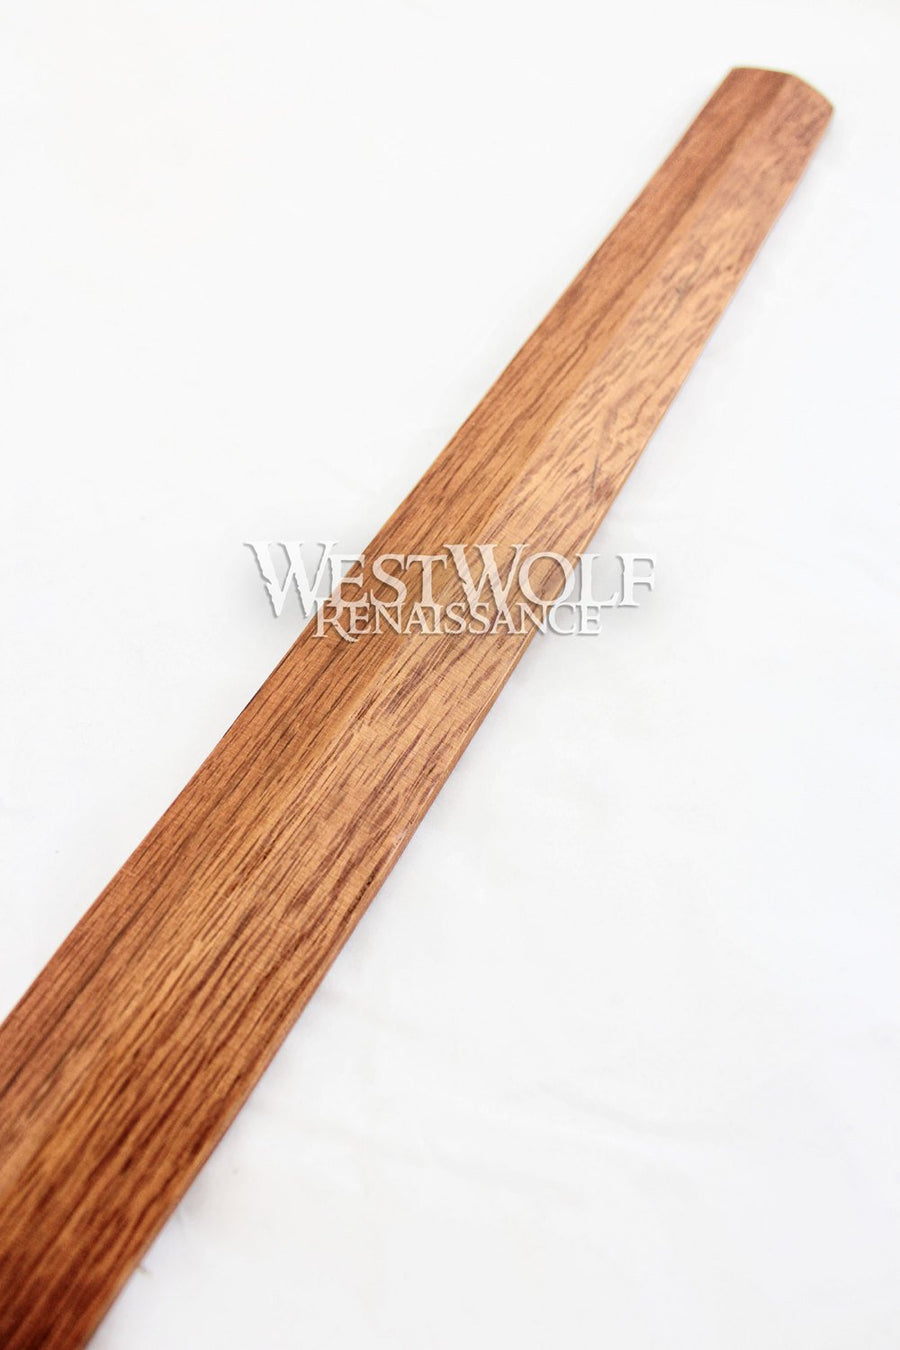 Japanese Suburito Practice Sword - Large 45 Inch Handmade Heavy Red Oak Wood Training Katana/Bokken